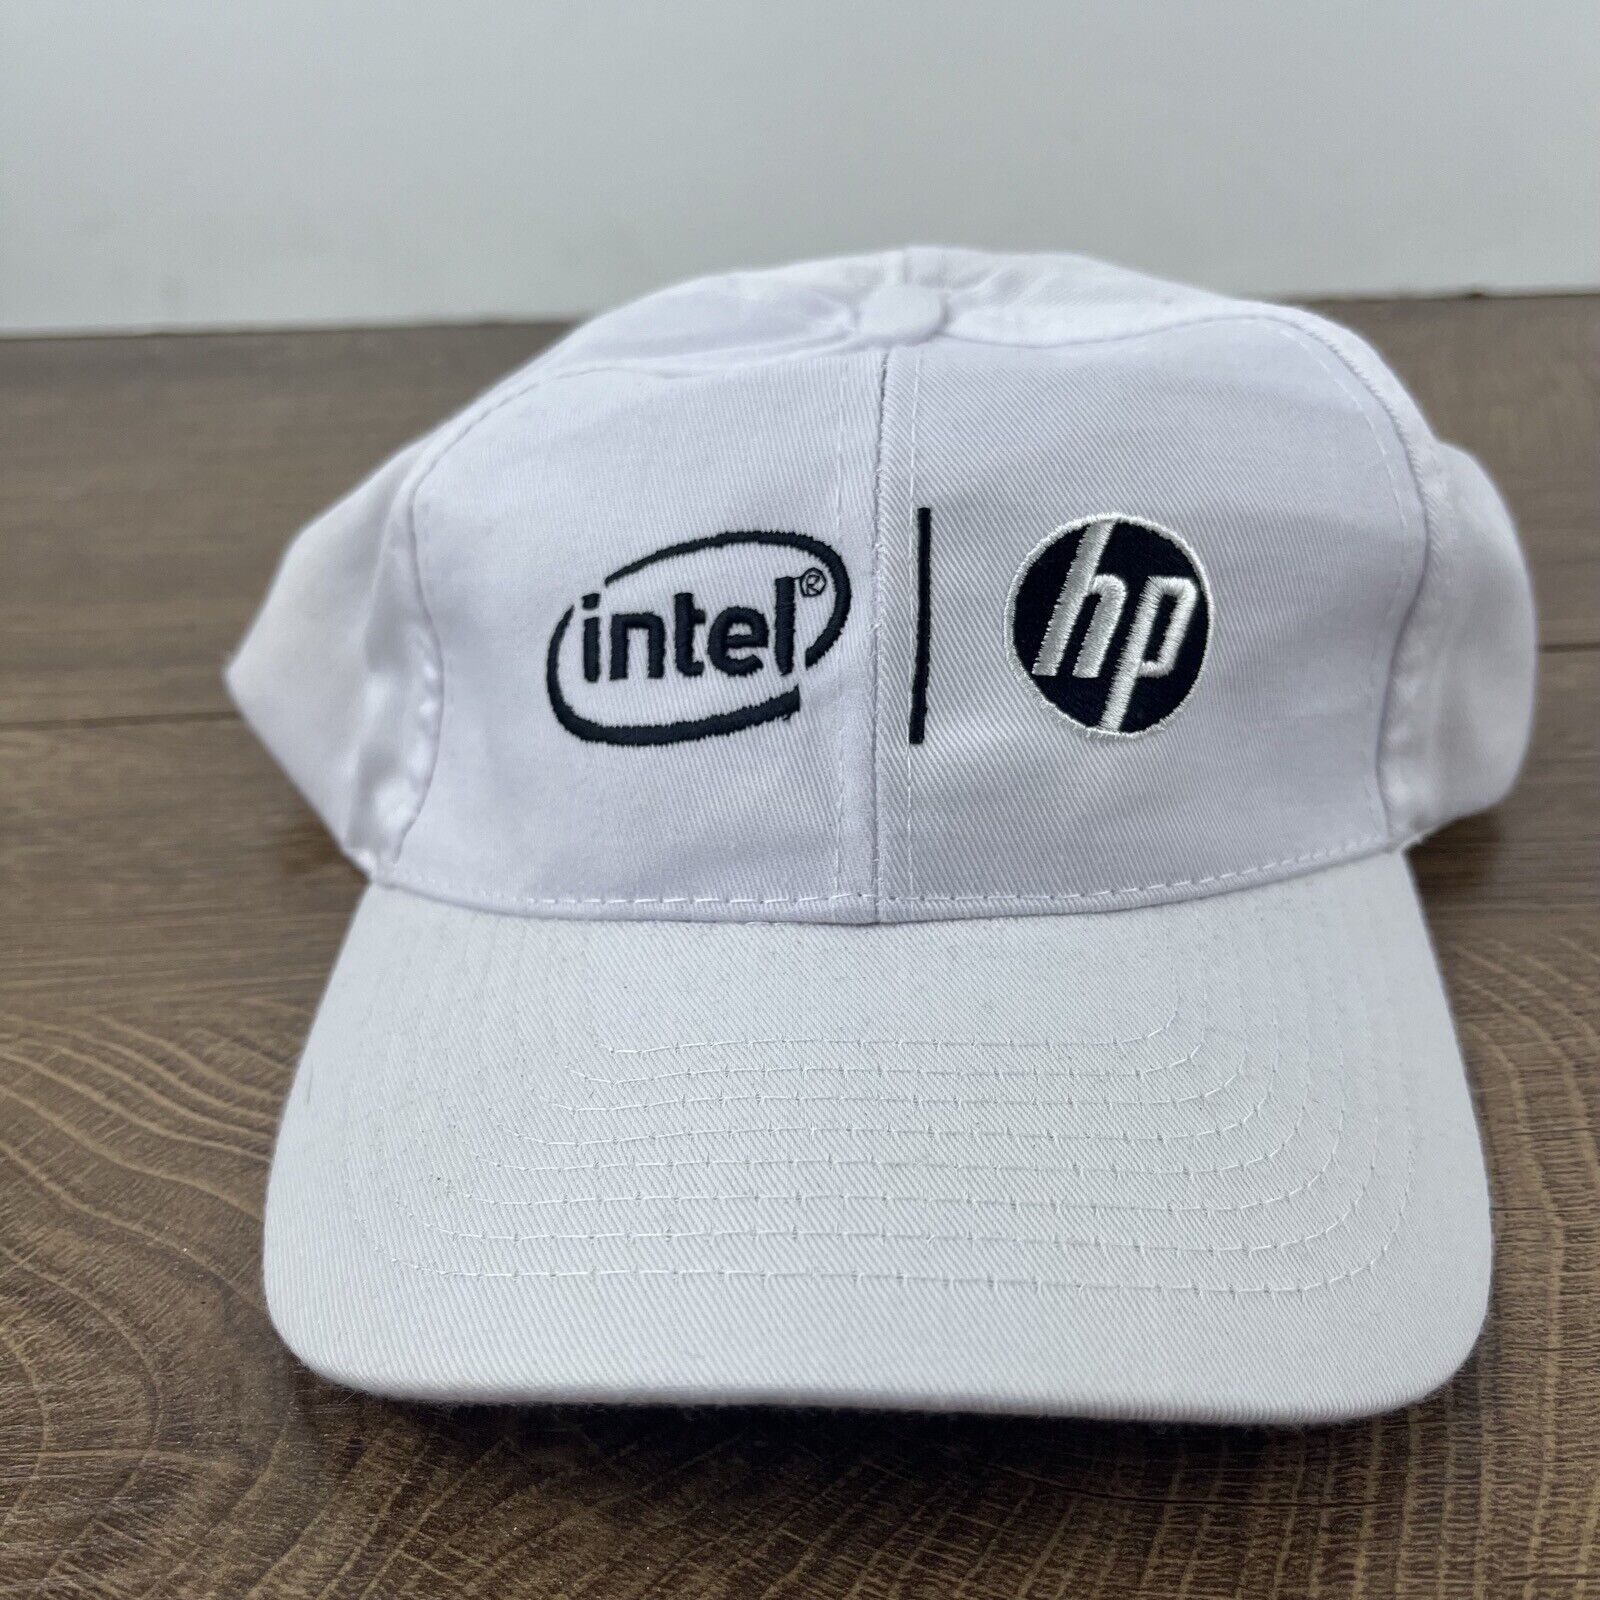 Intel HP Hat White Cap Hat Adjustable Hat White Adult Hat